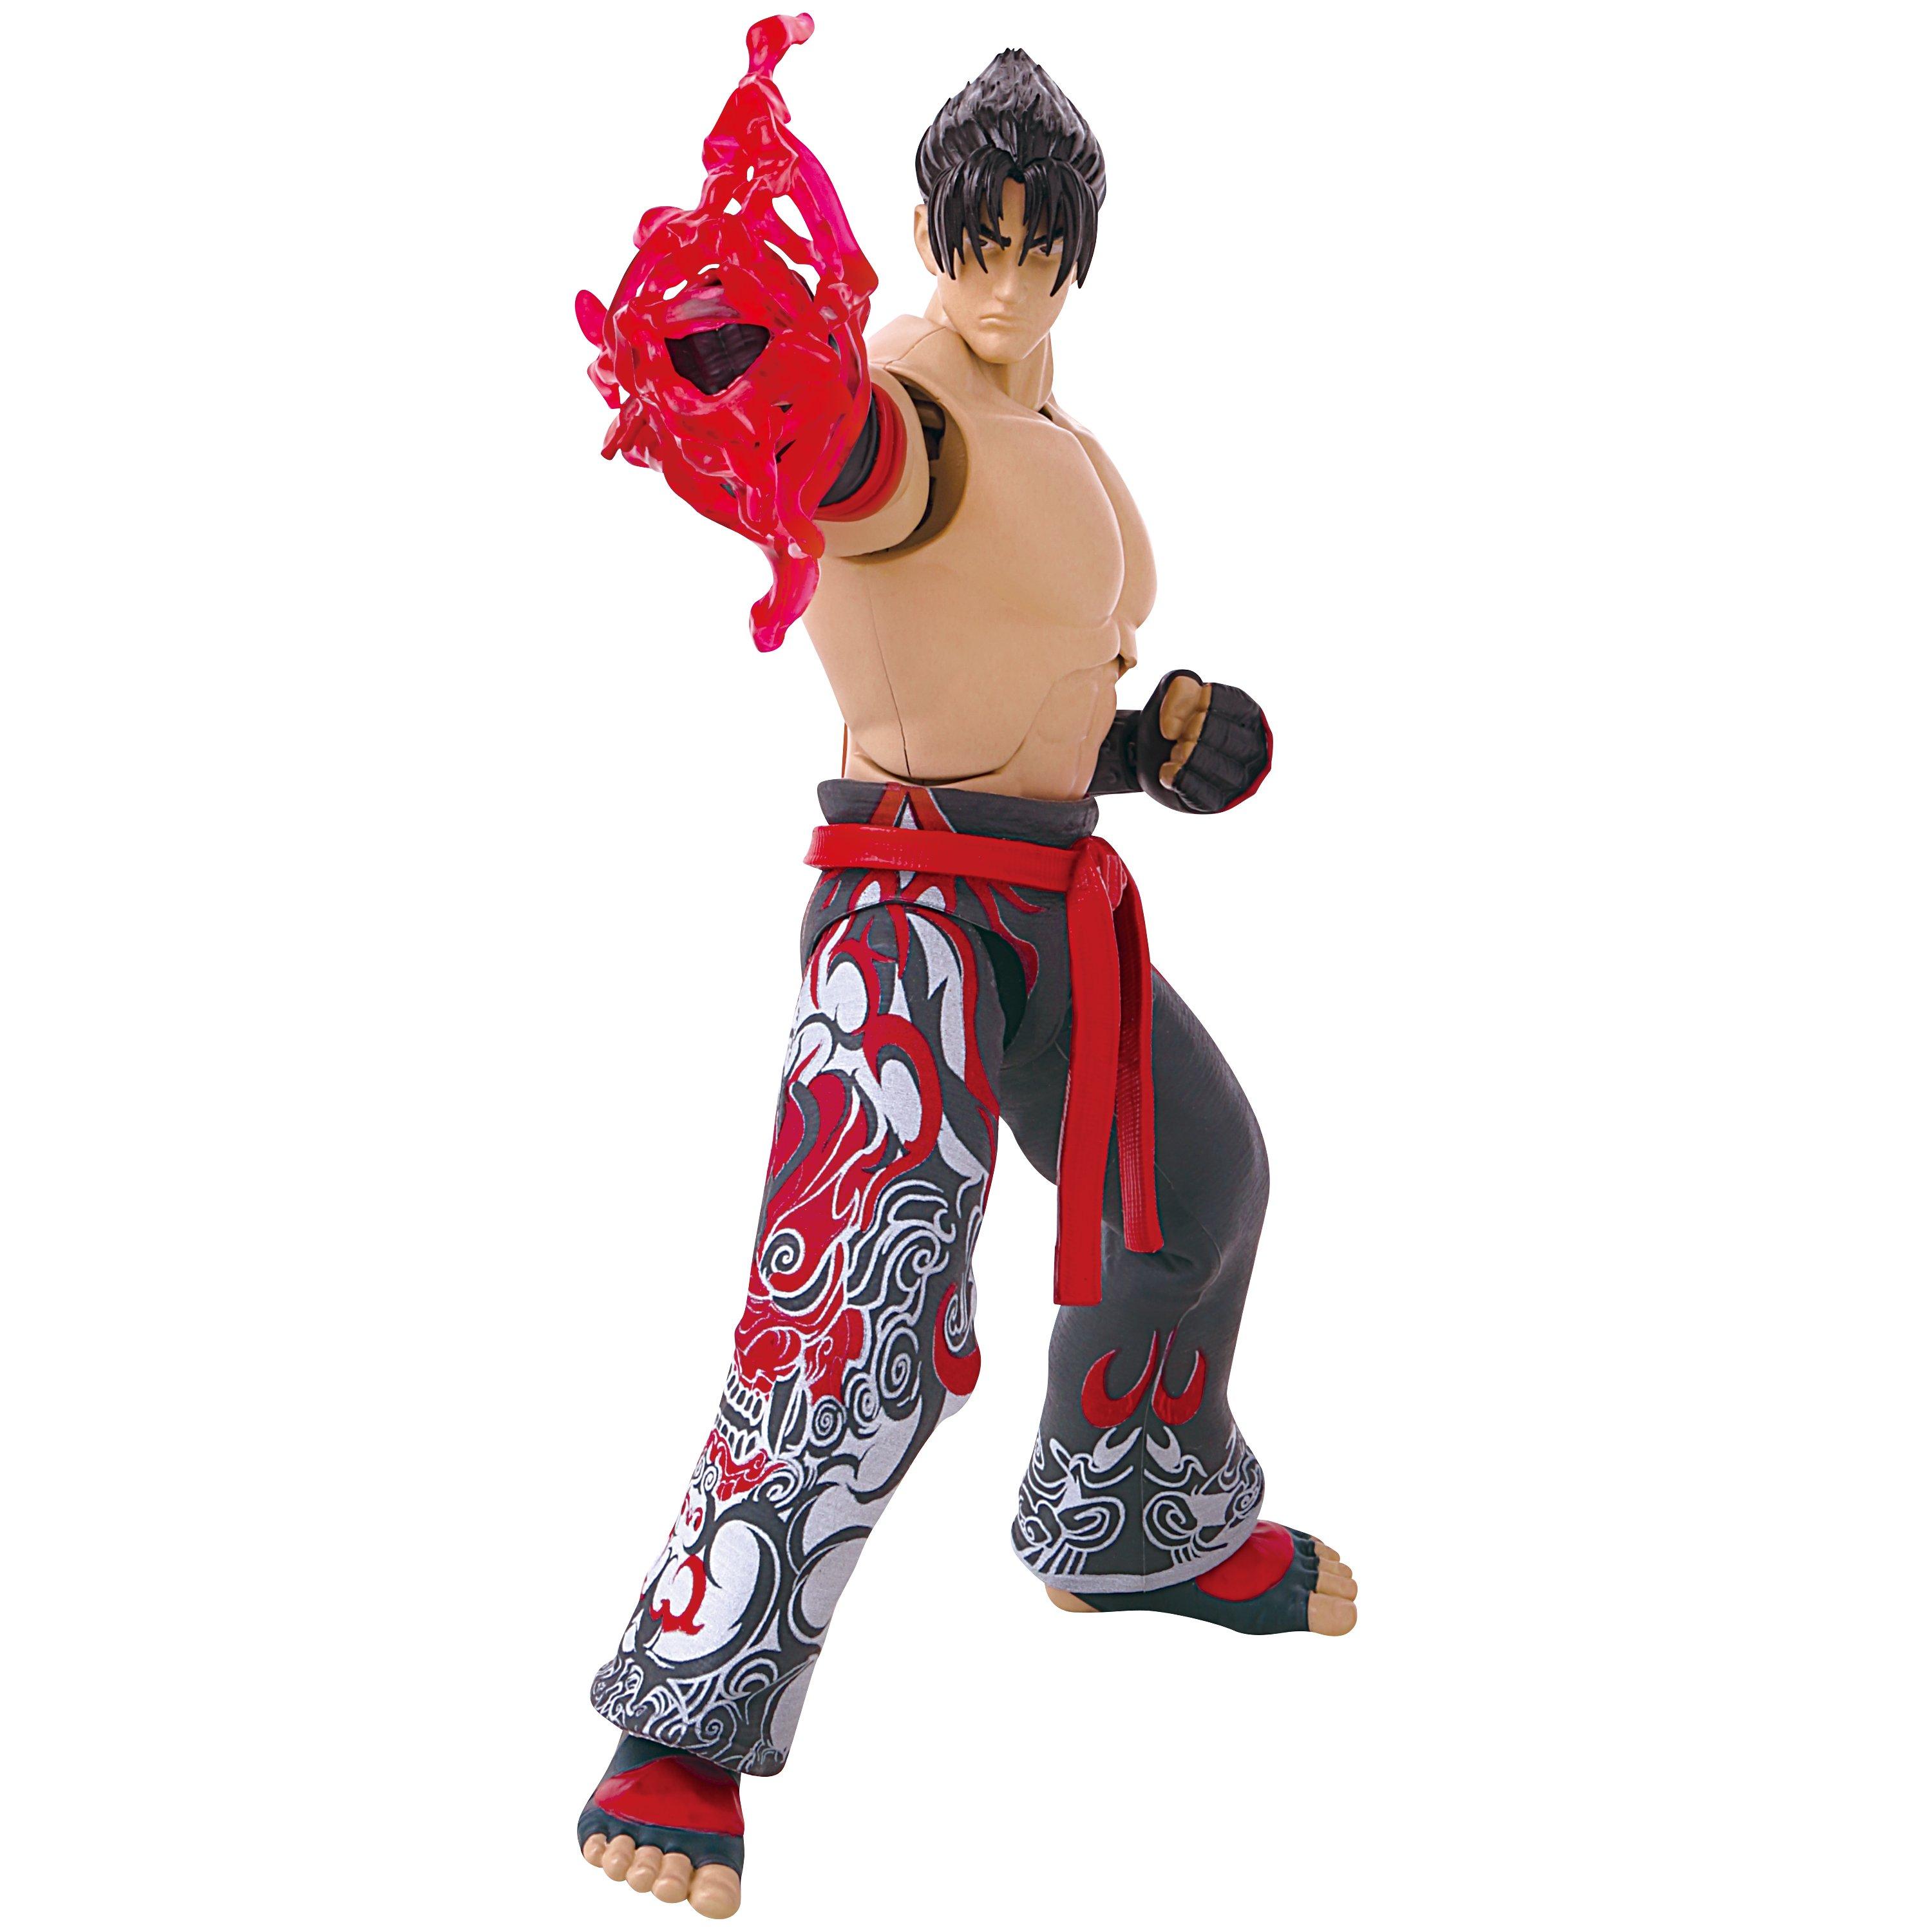 Bandai Tekken Game Dimensions Jin Kazama 6.5-in Action Figure